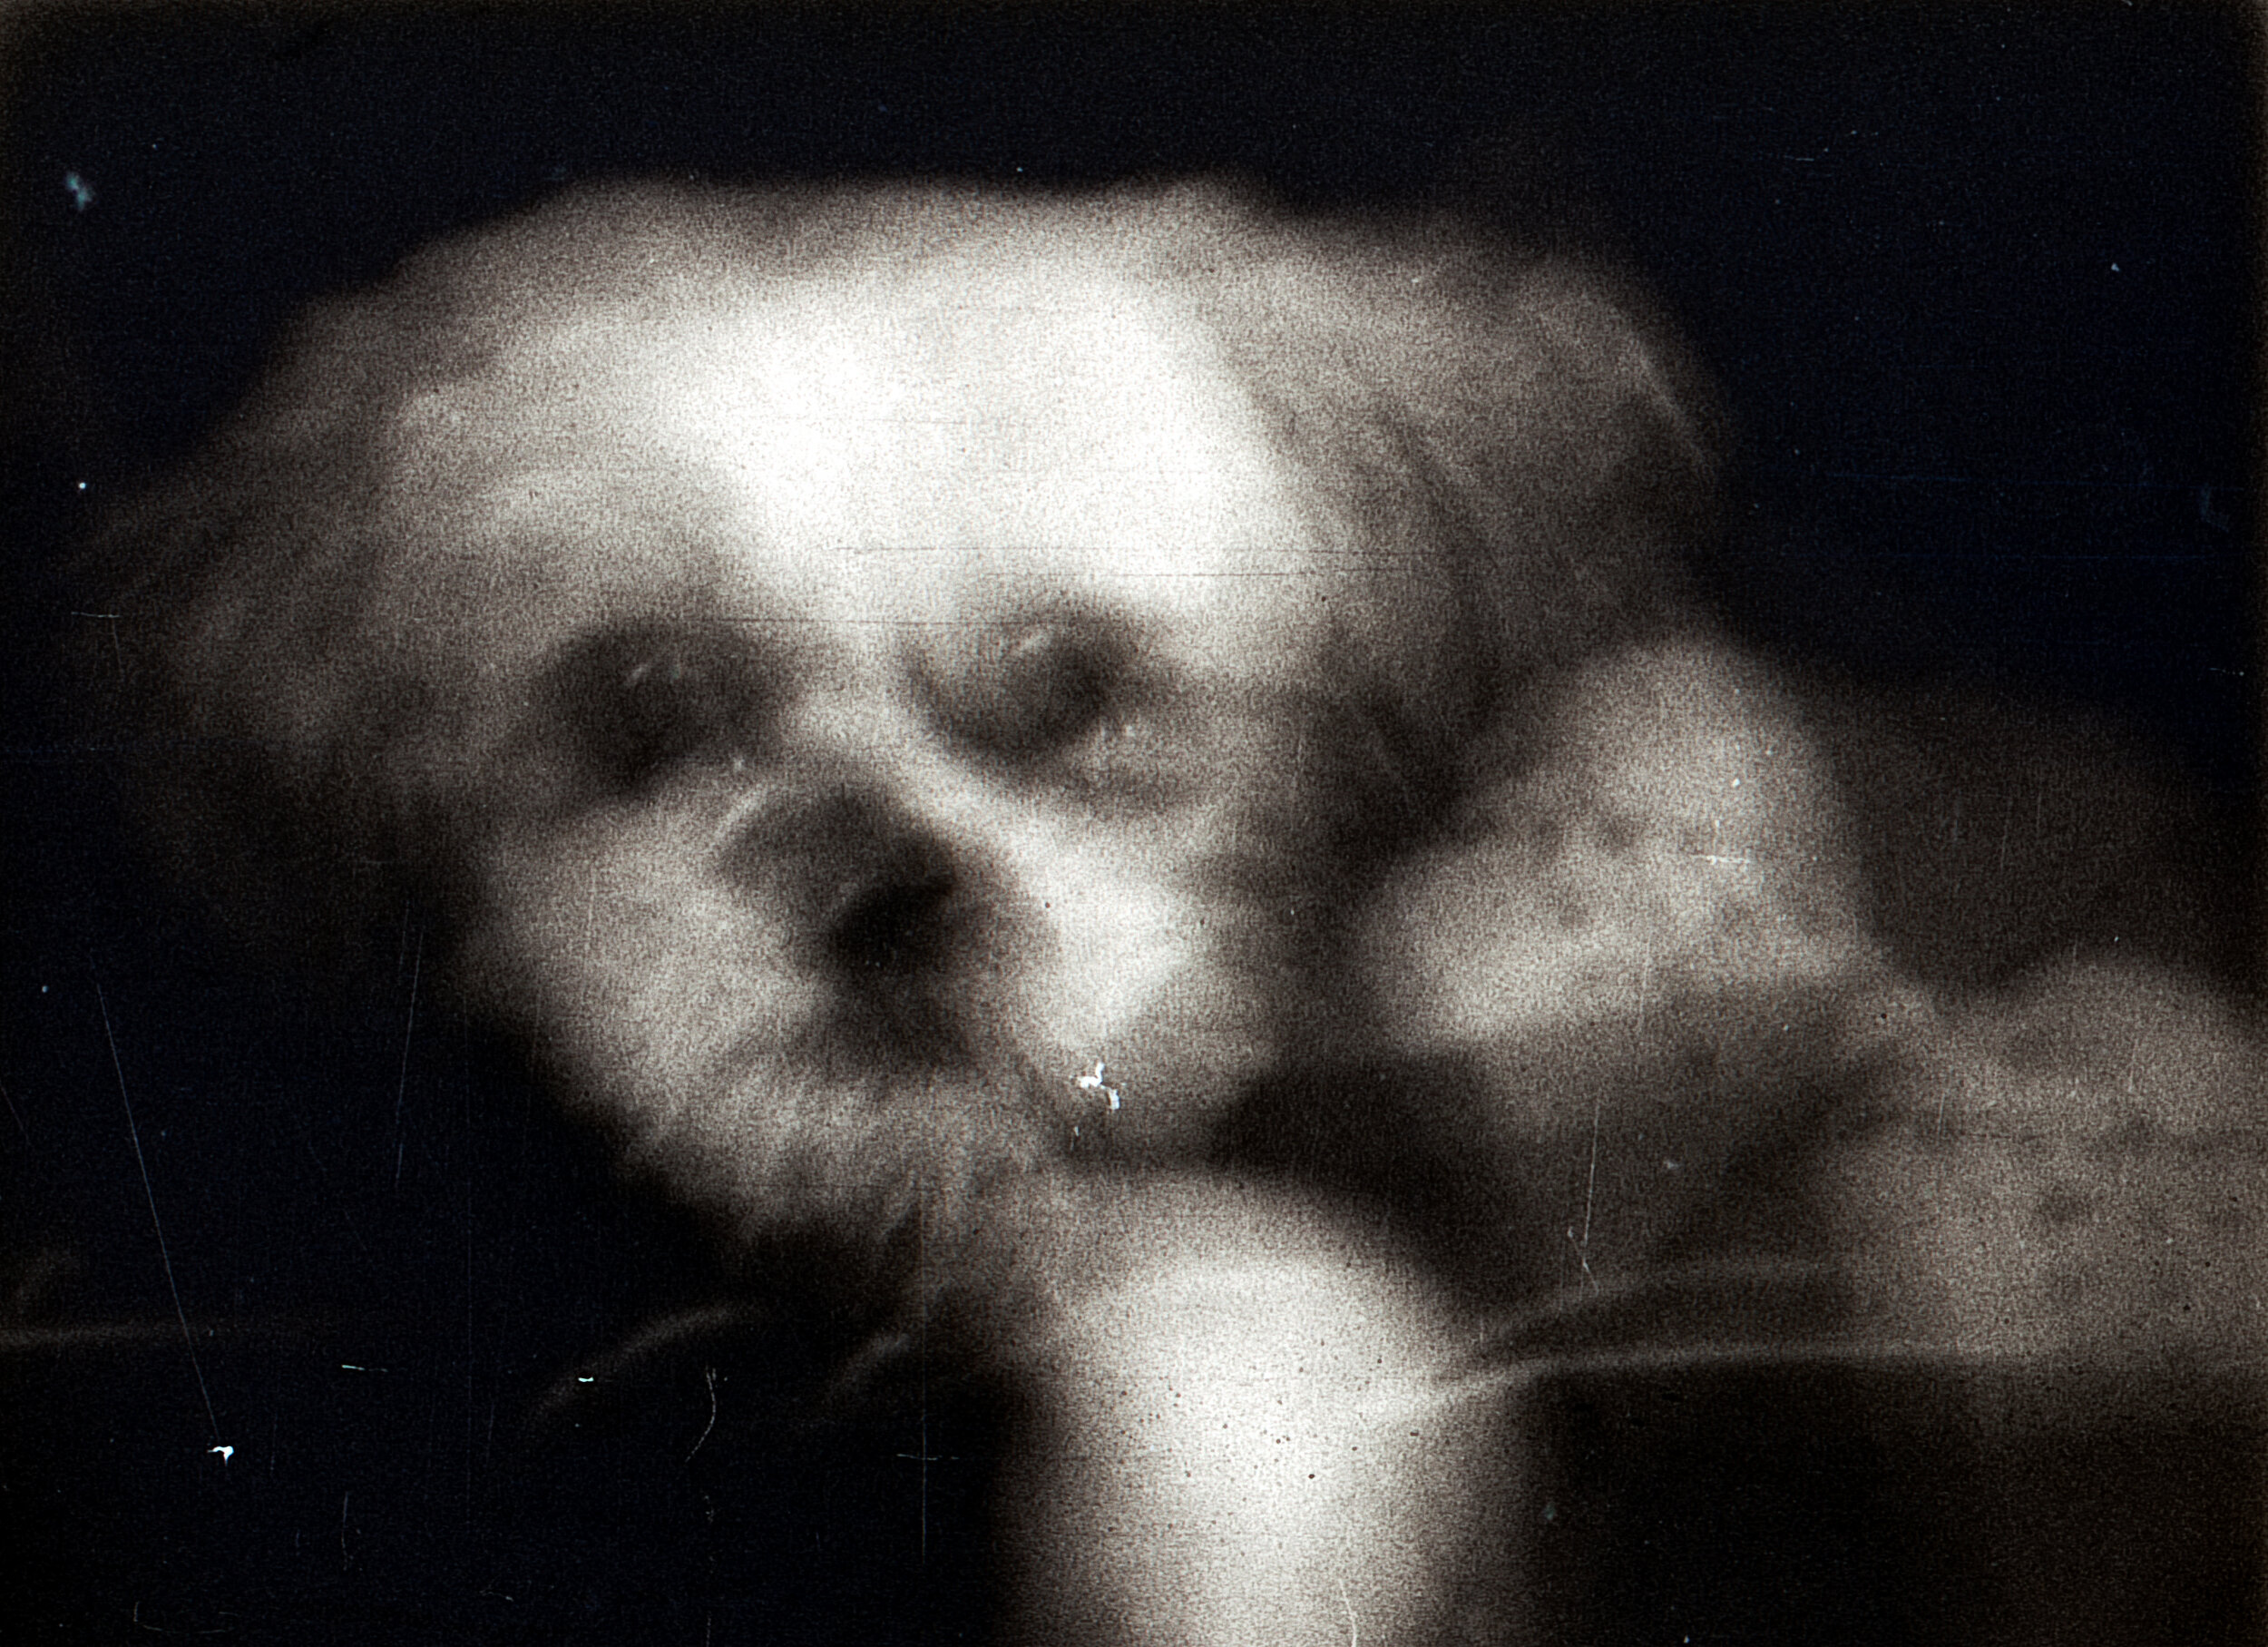 Blurry puppy, a rare glance into the lens